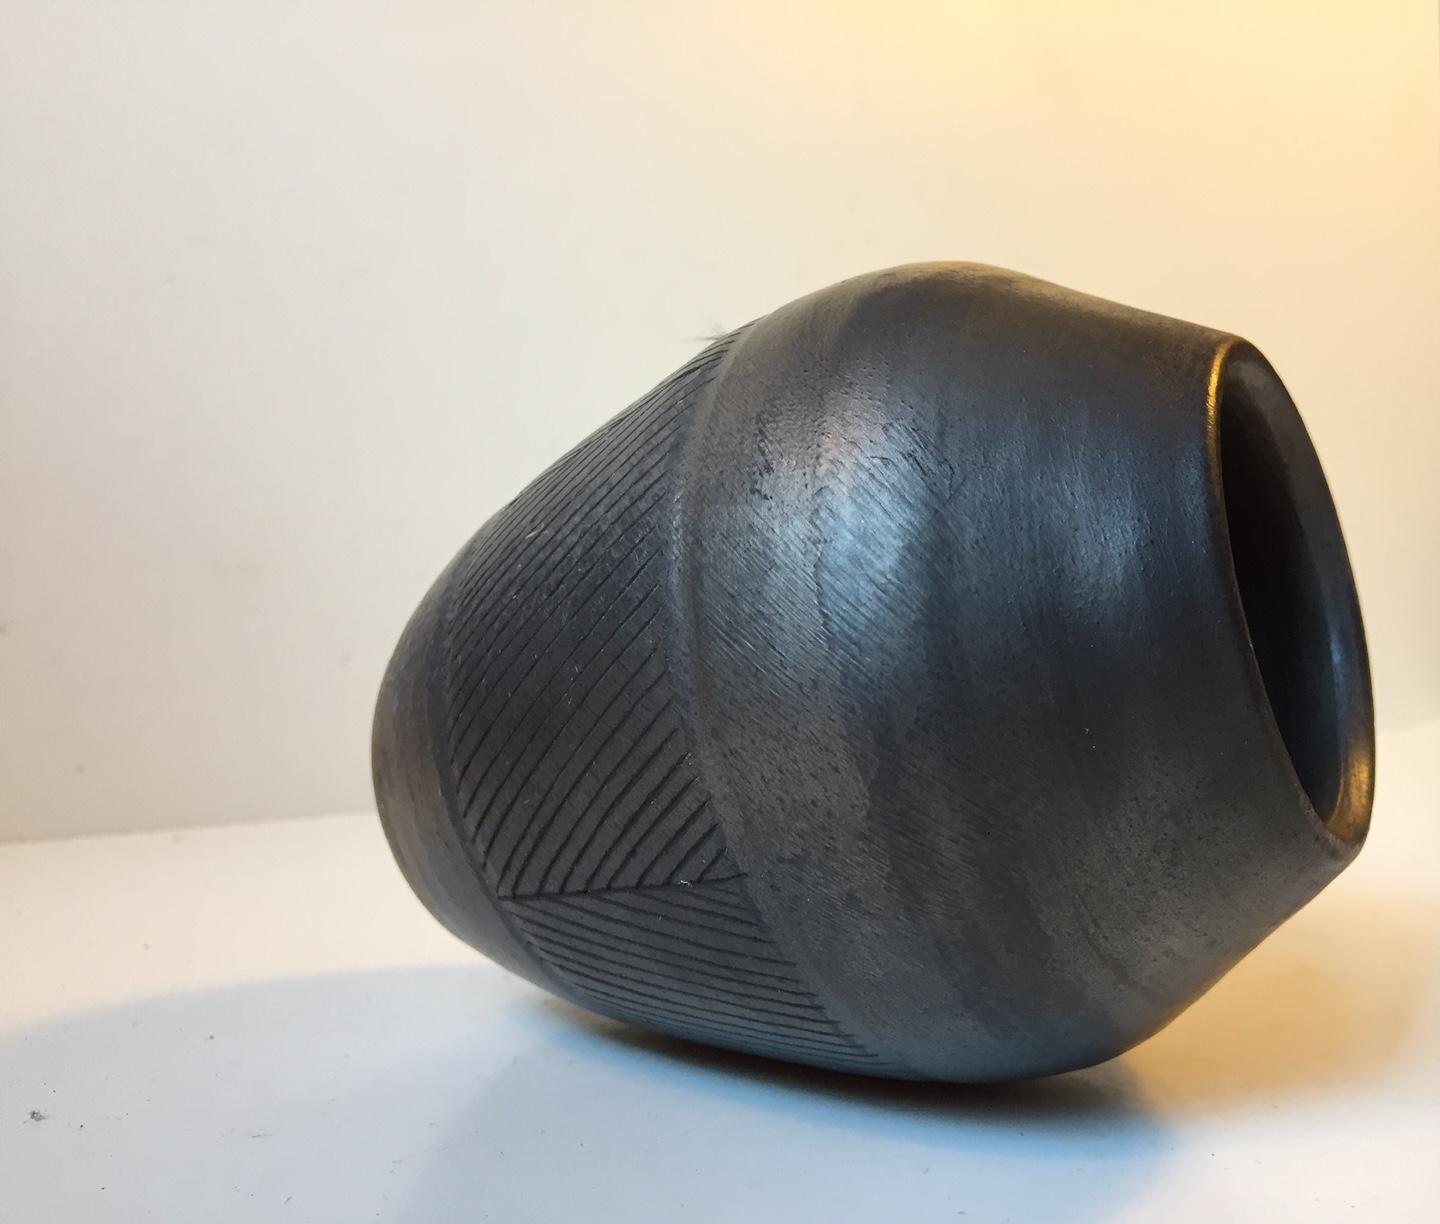 Glazed Scandinavian Modern Black Ceramic Vase, 1960s For Sale